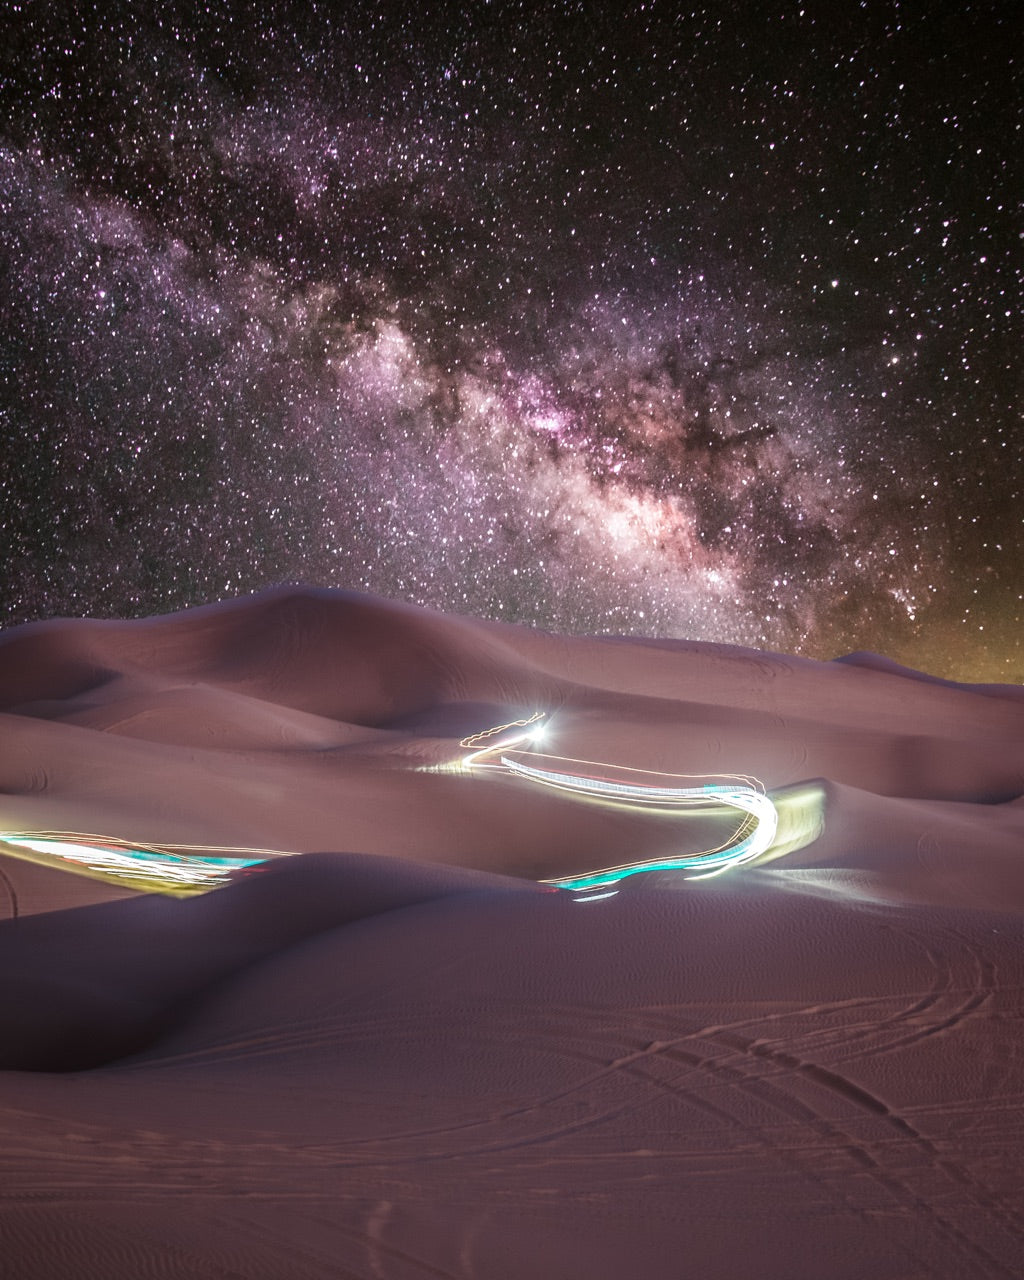 Nighttime desert with Milky Way